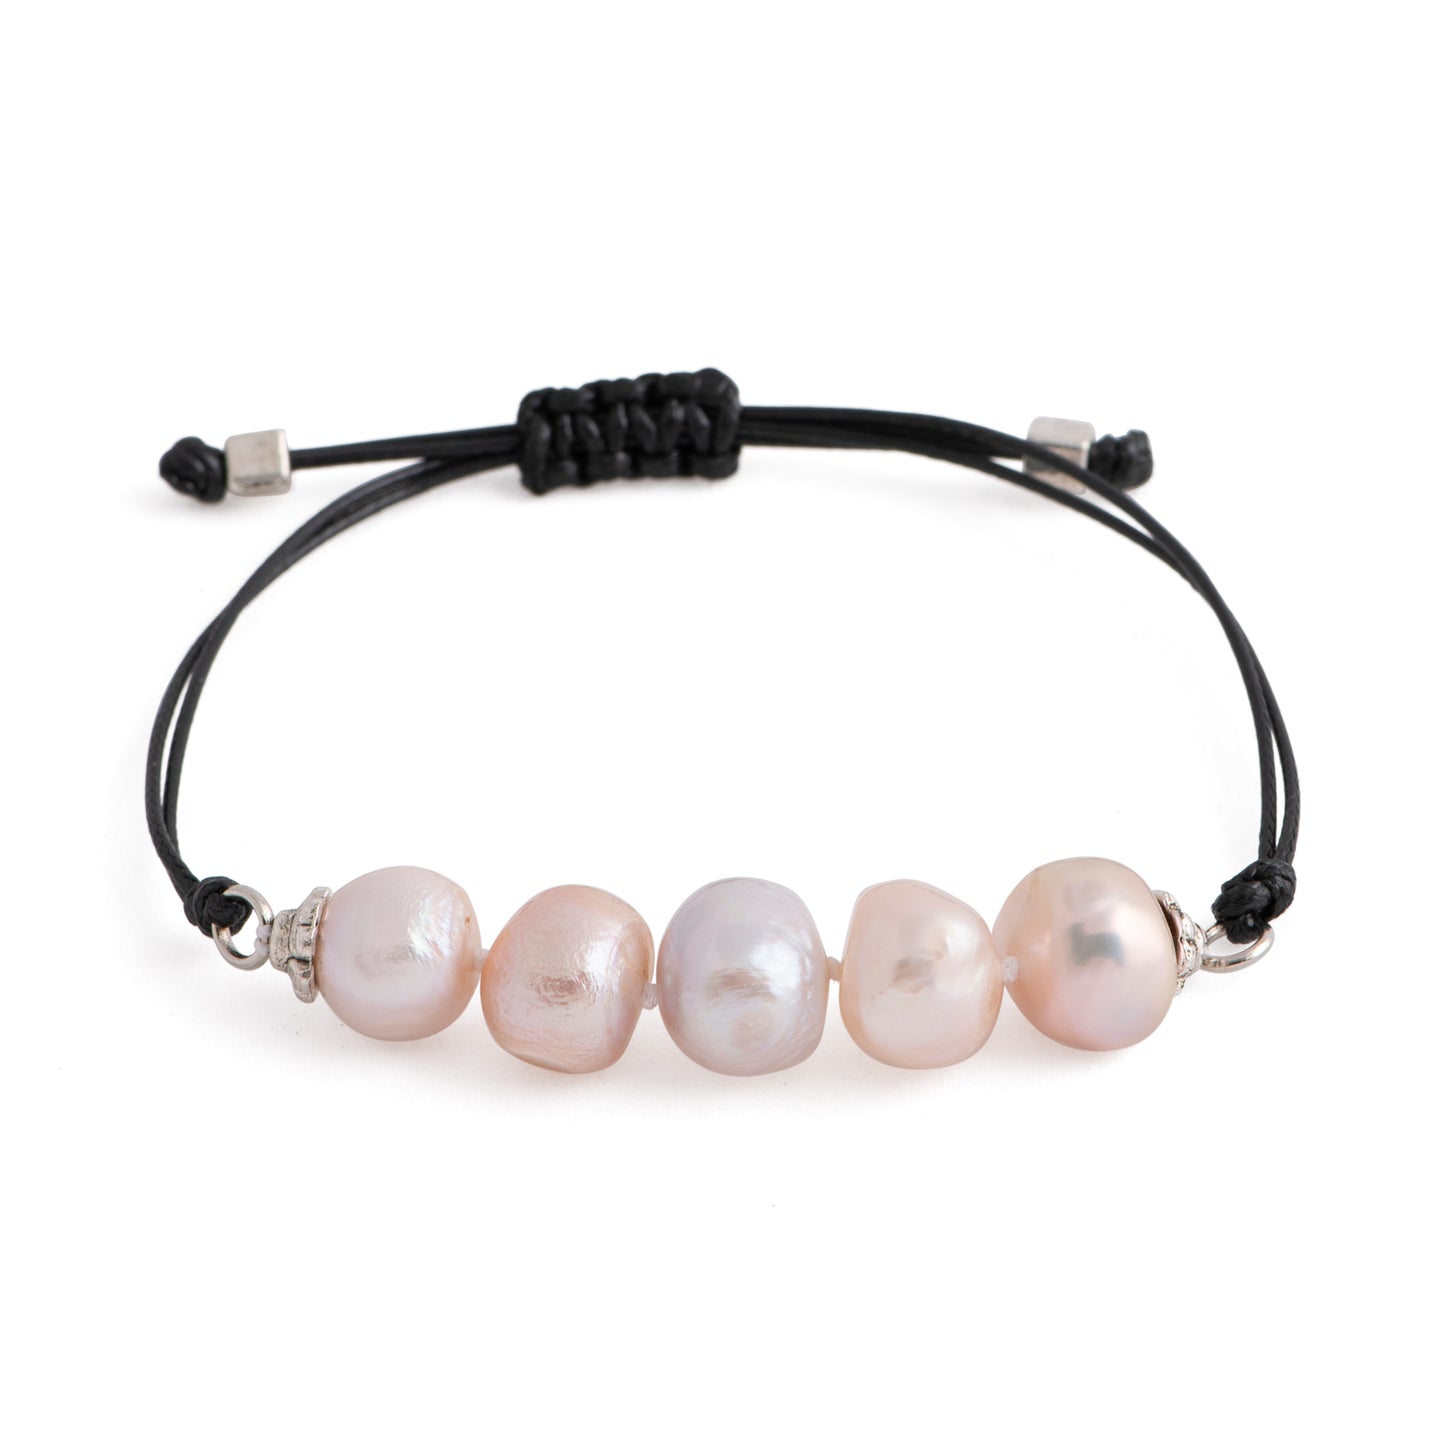 Aegean - Five freshwater pearl adjustable string bracelet (Black strand, natural pearls)